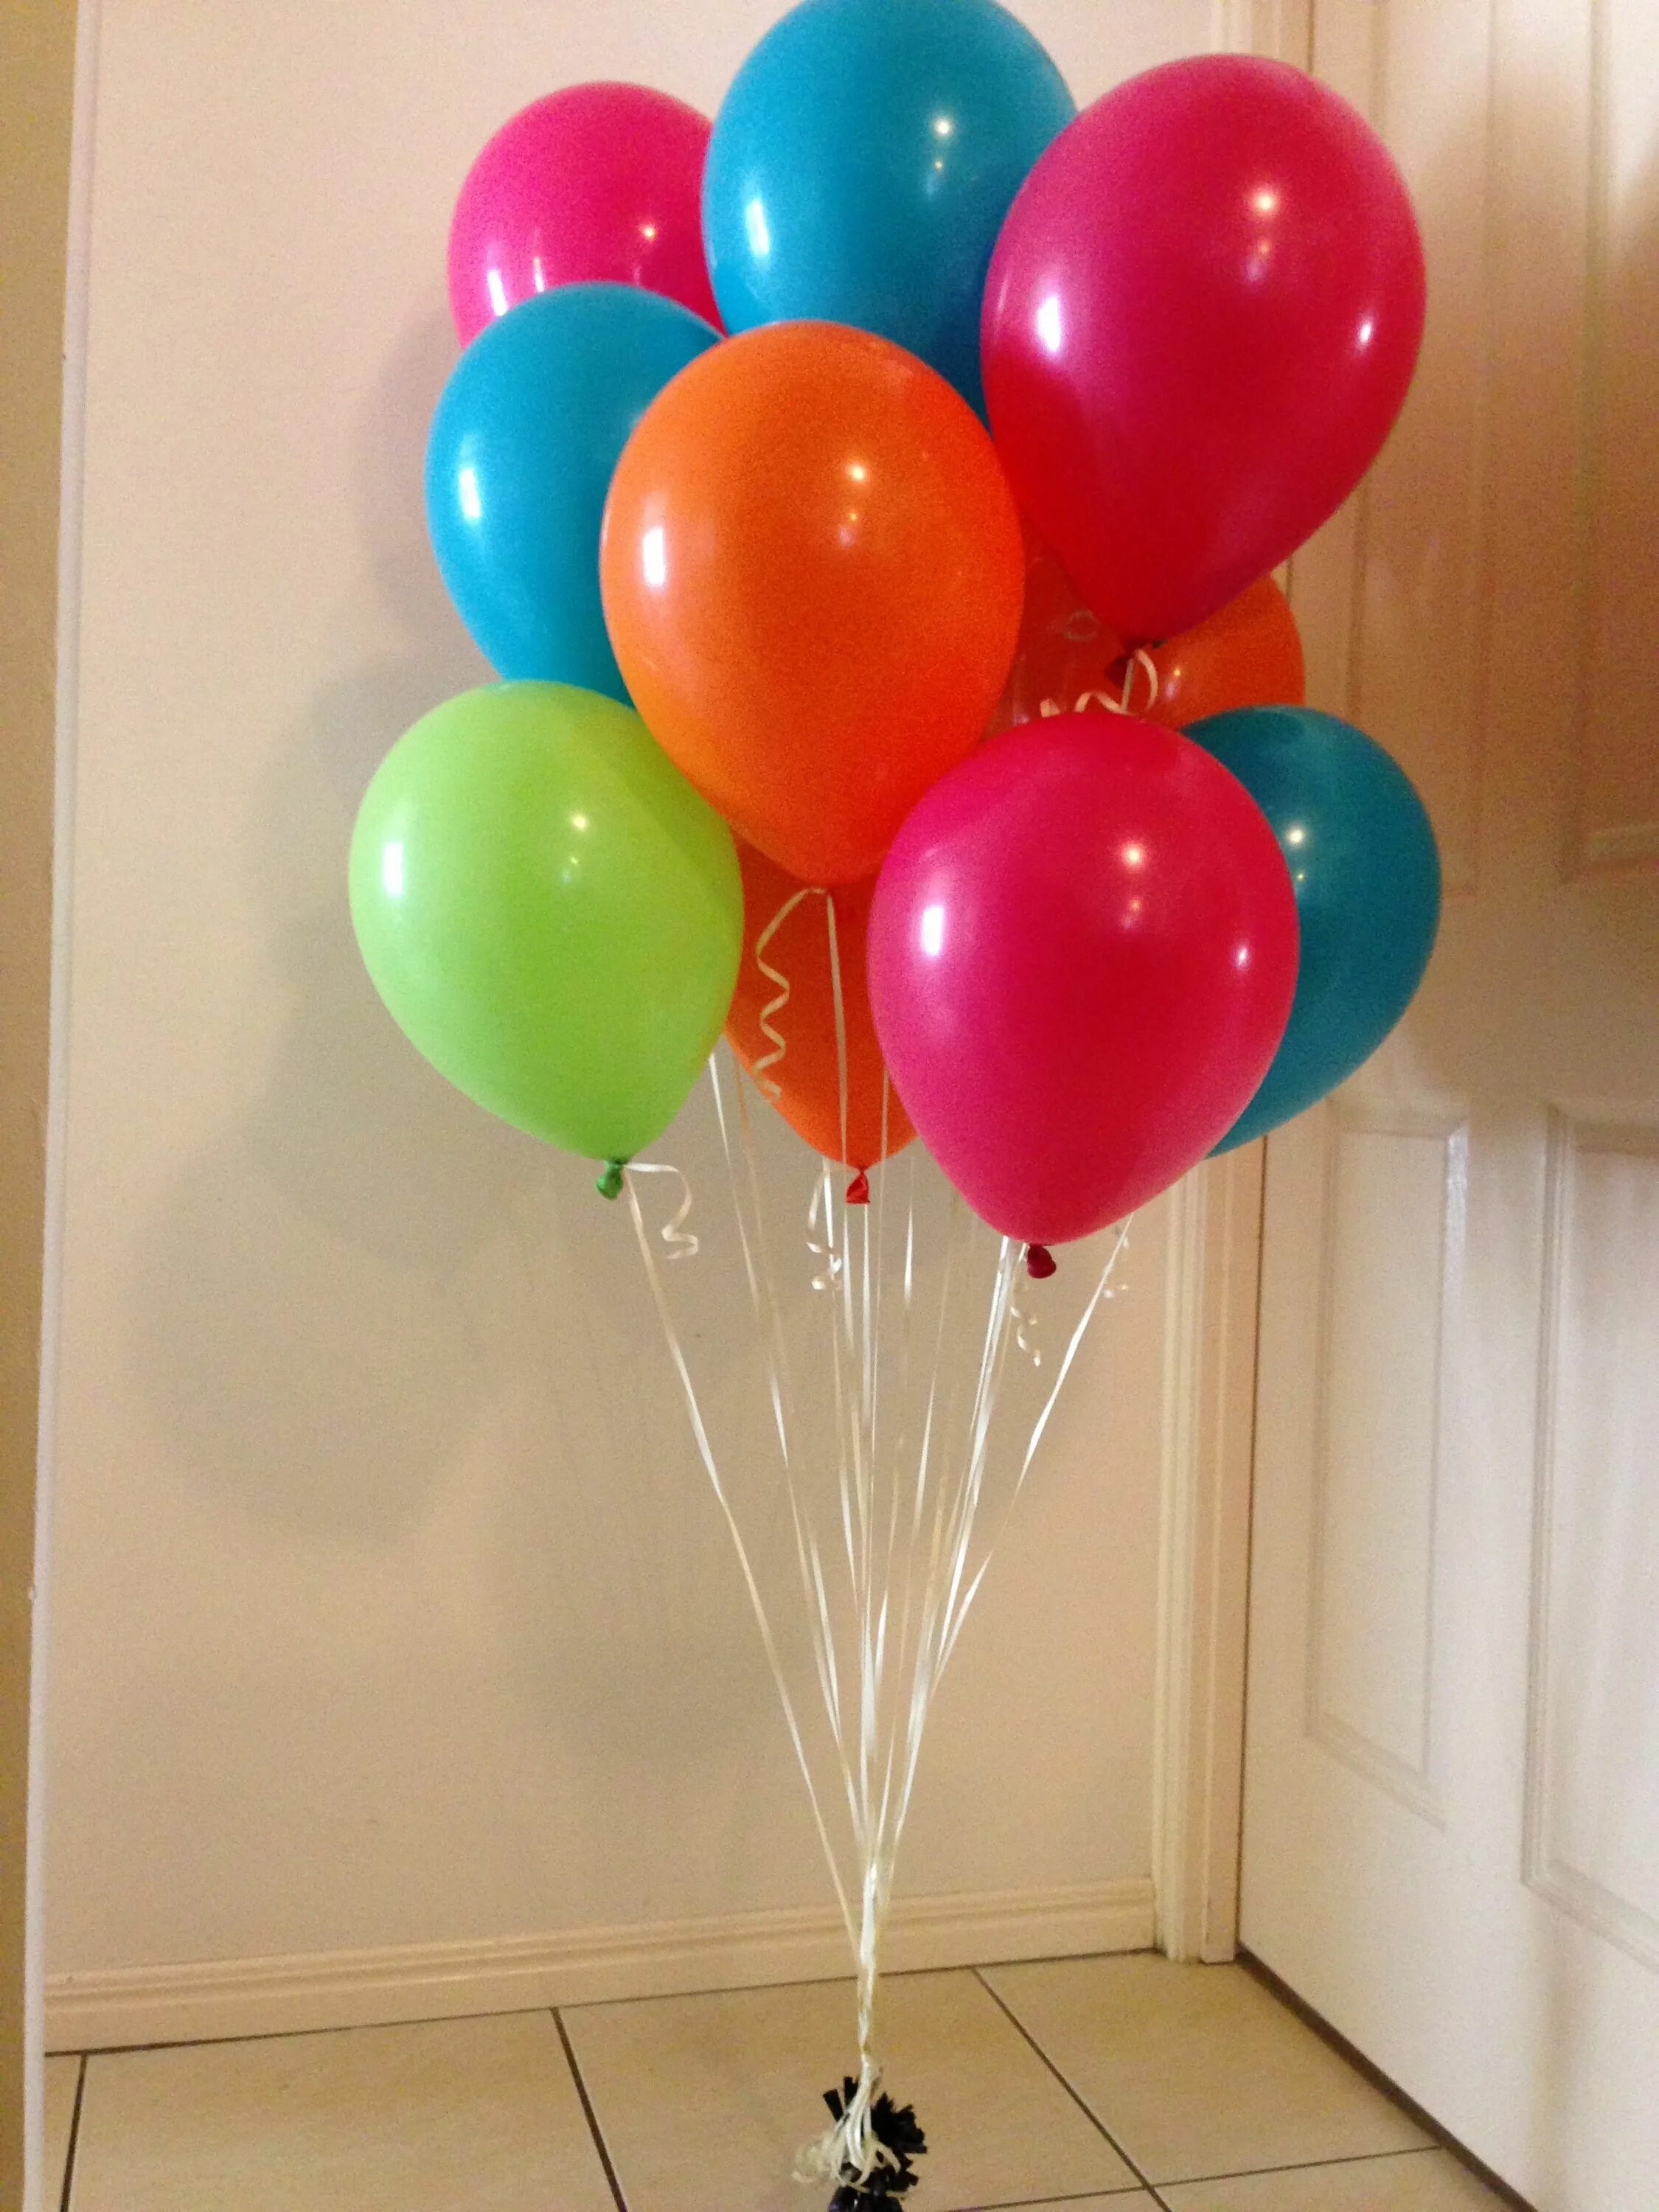 Гелевые шары дома. Воздушные шары. Воздушный шарик. Гелевые шары. Воздушные шары гелиевые.